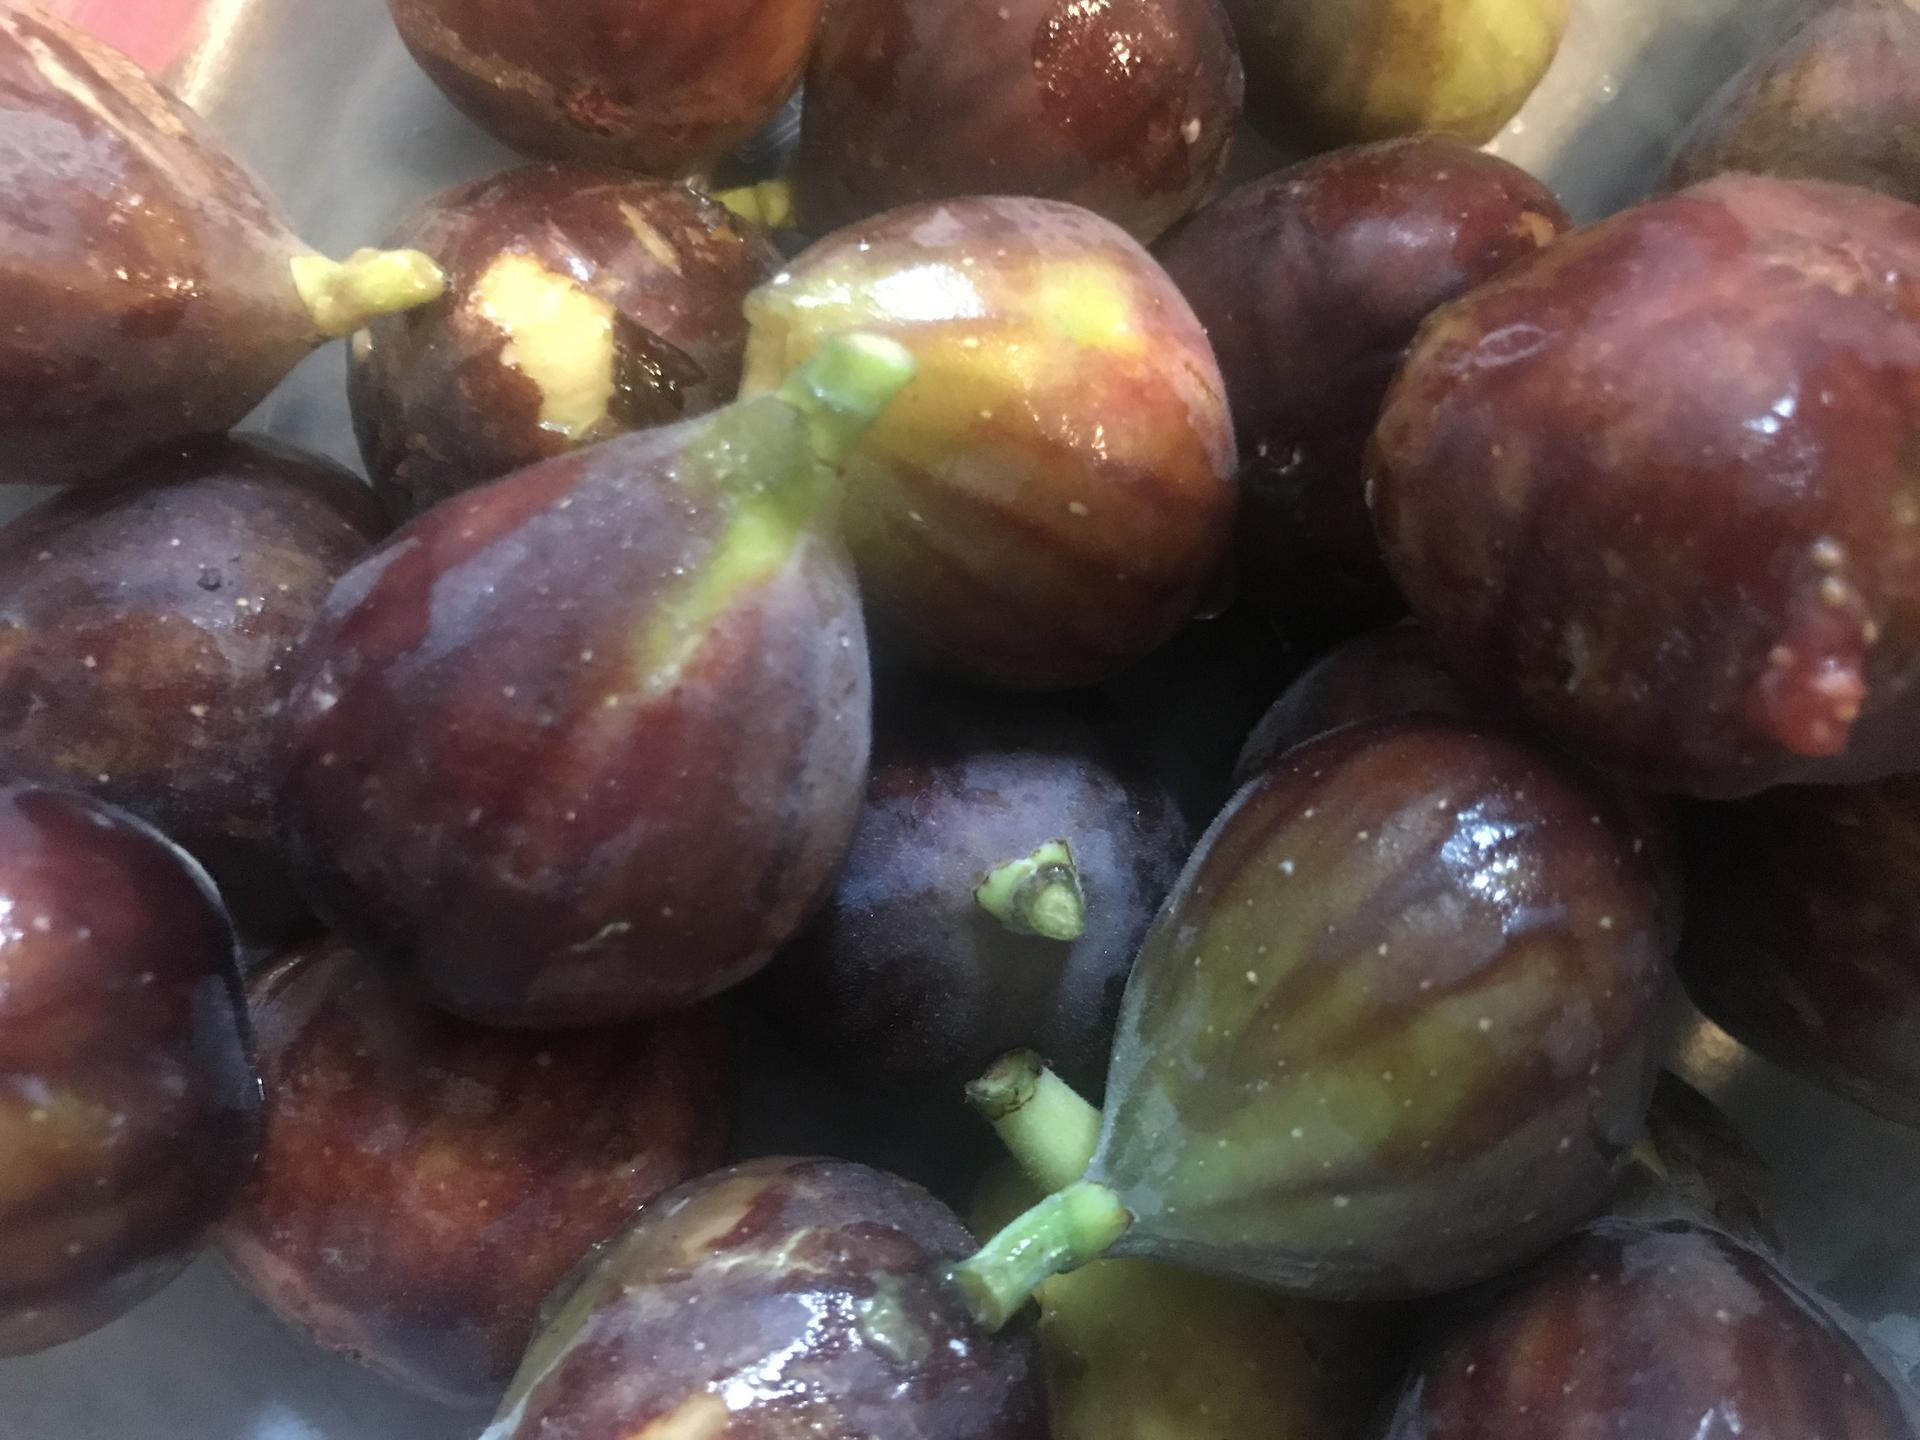 A pile of ripe purple figs